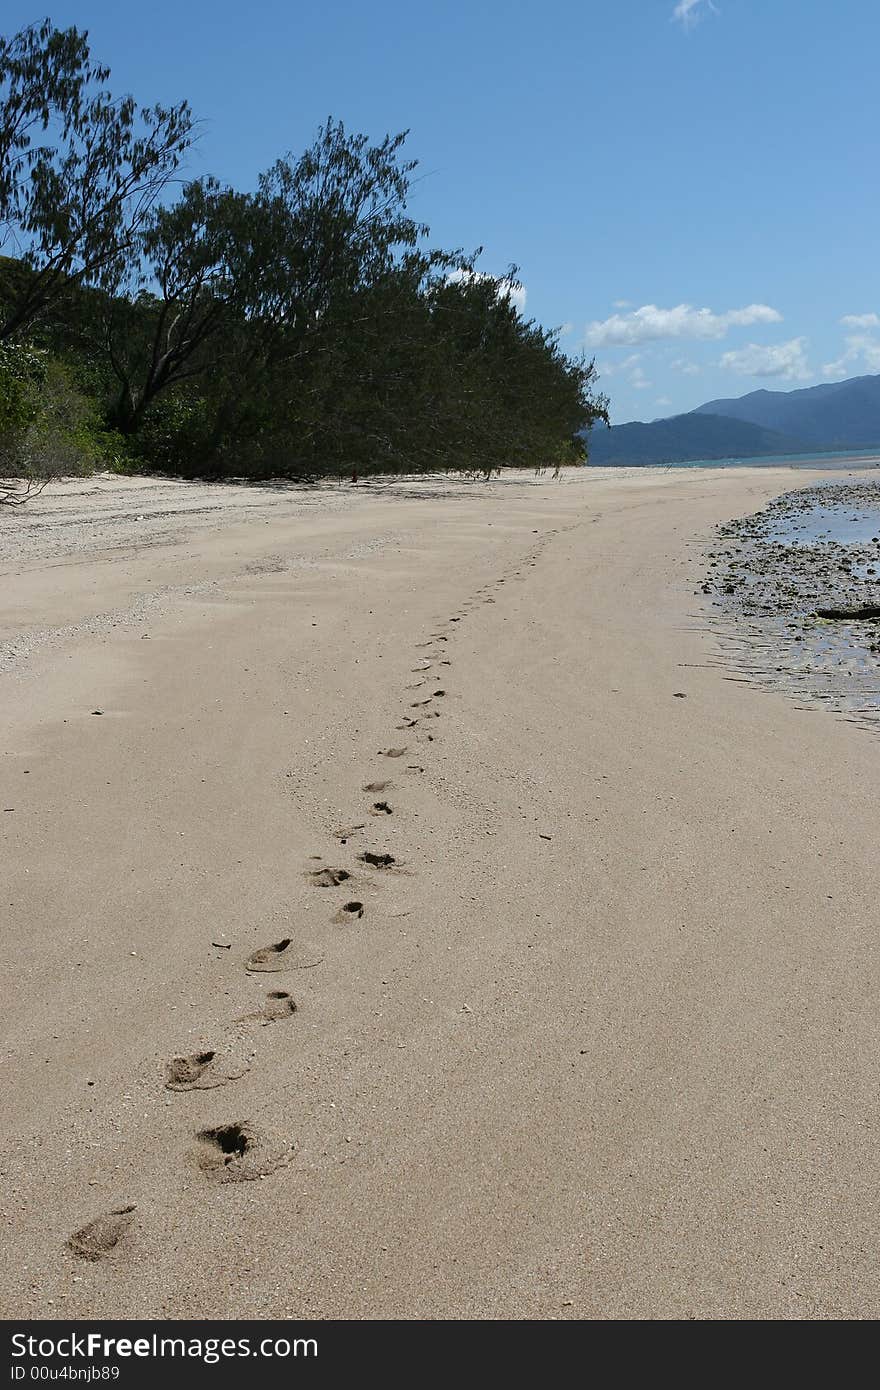 Footprints on a deserted beach in far north queensland